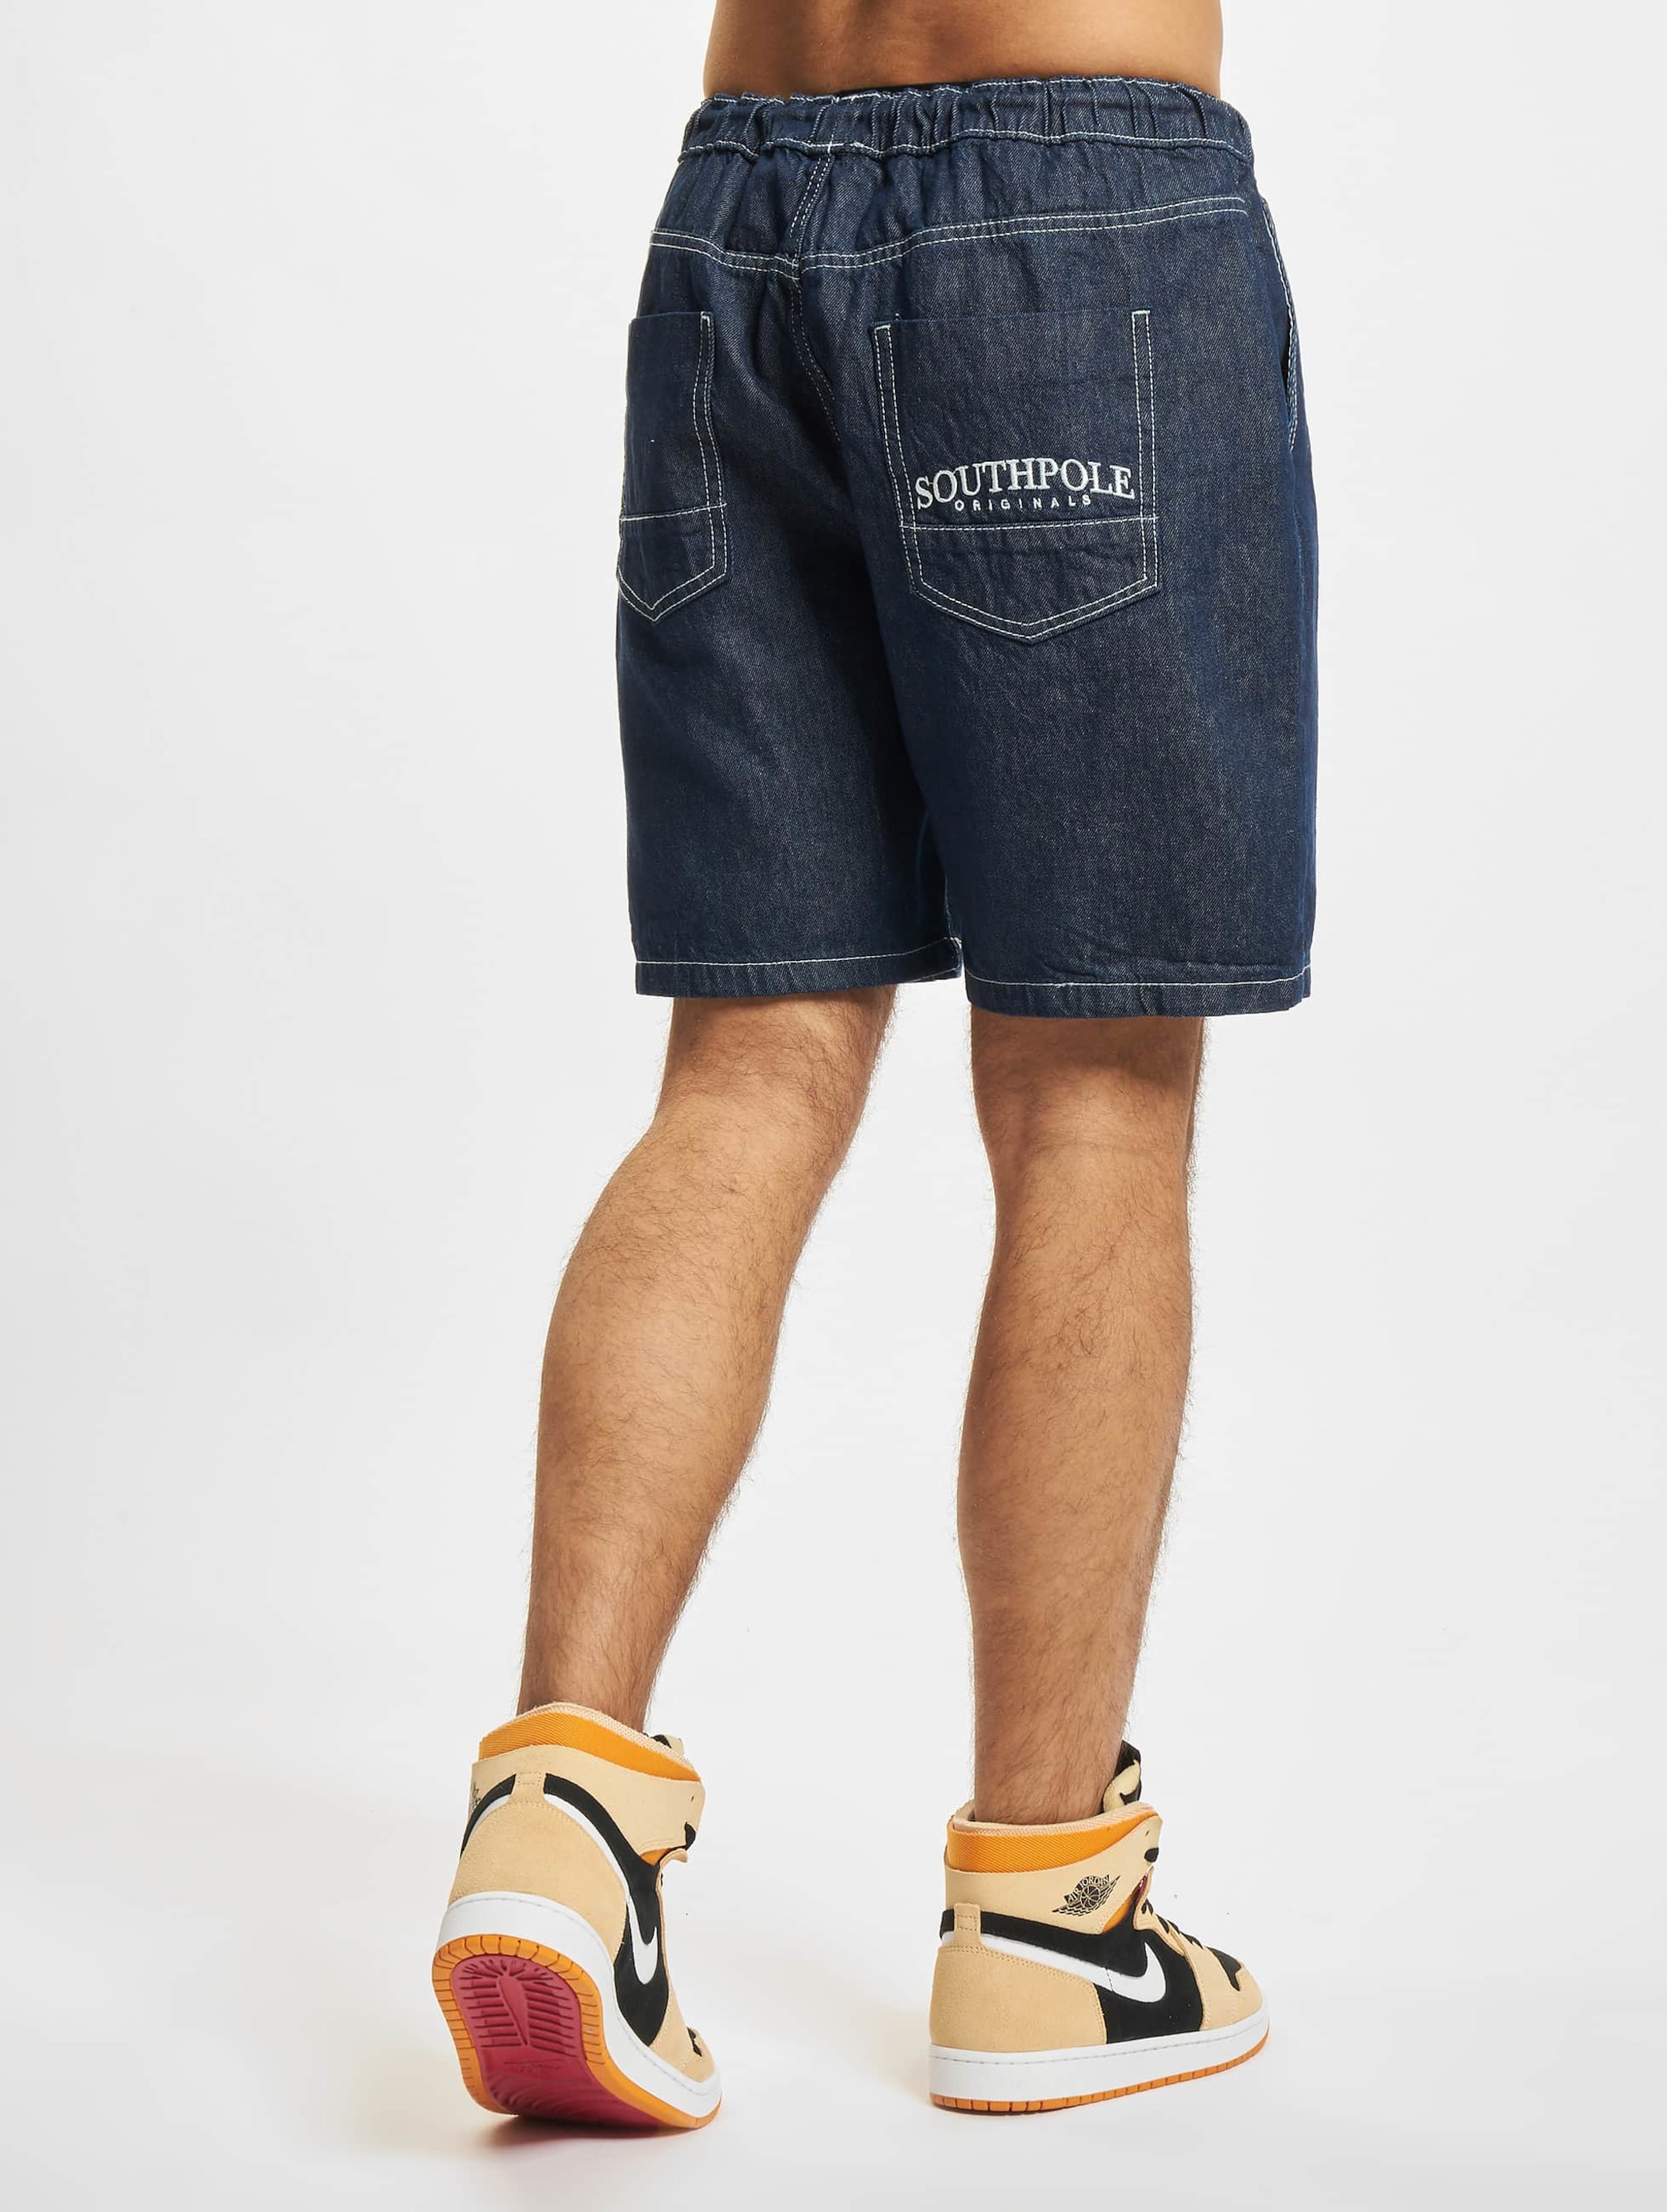 Southpole Denim shorts - darkblue washed/dark blue - Zalando.de